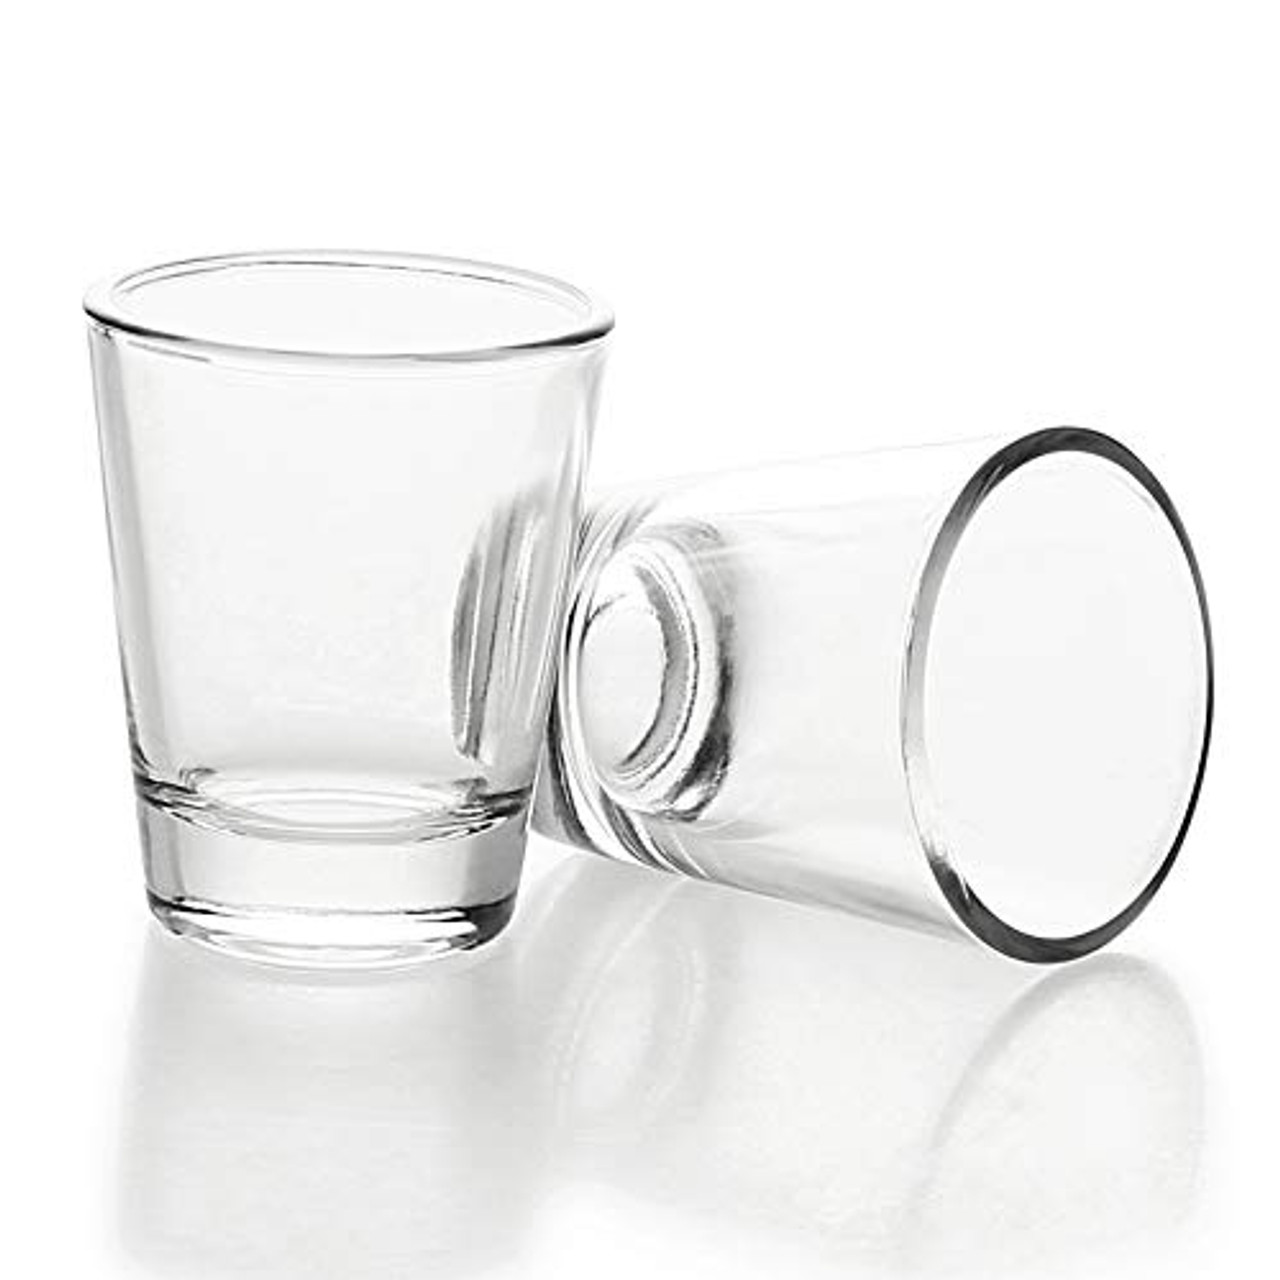 10 Miniature Beer Mugs Shot Plastic Glasses Clear 1 Ounce oz 